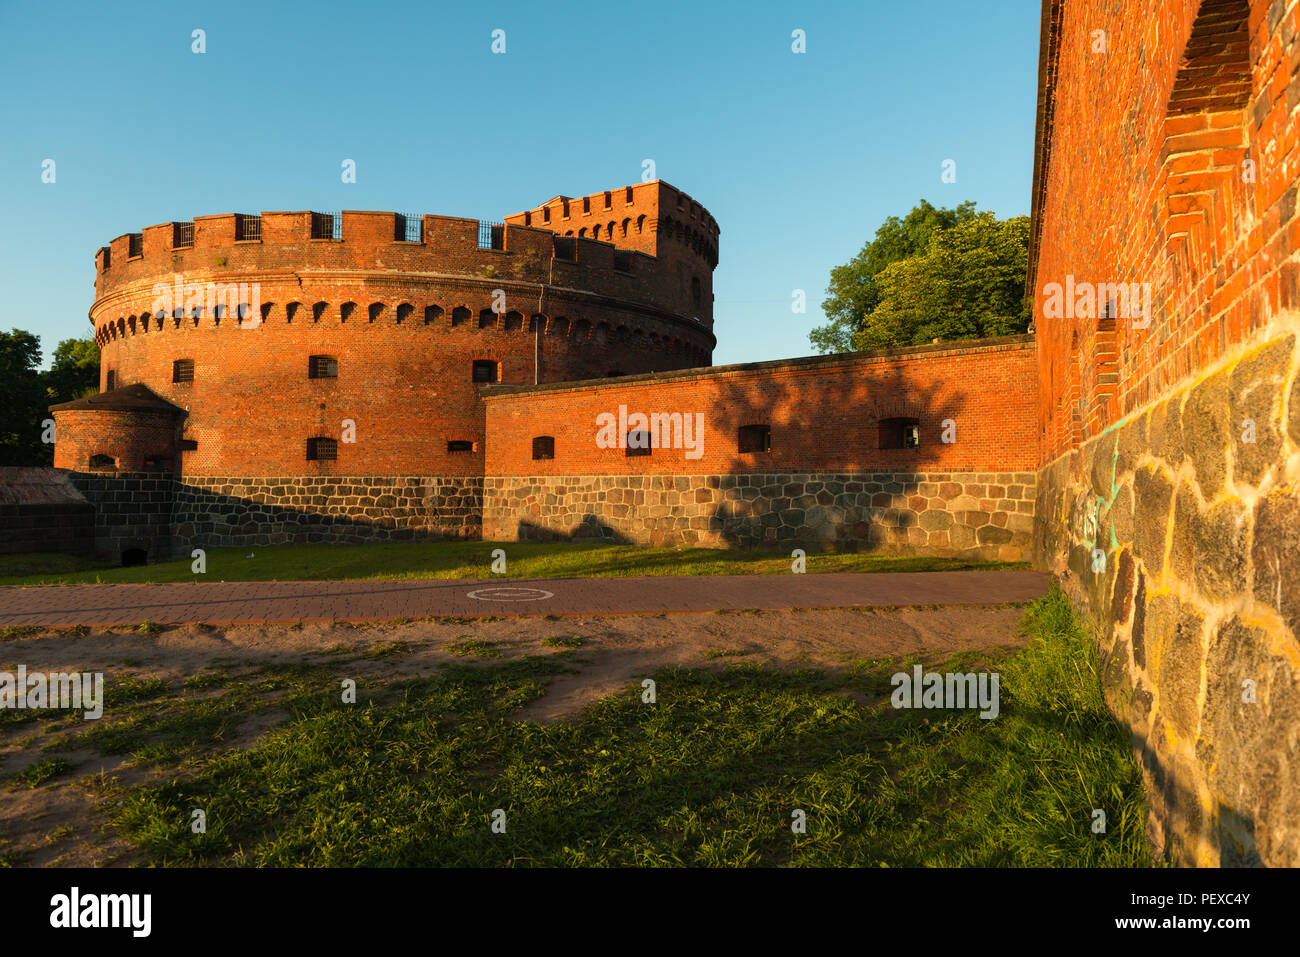 The Dohnaturm or Dohna Tower, Oberteich,old town wall, mid19th century,  amber museum, Kaliningrad, former Königsberg, Oblast Kaliningrad, Russia| Stock Photo